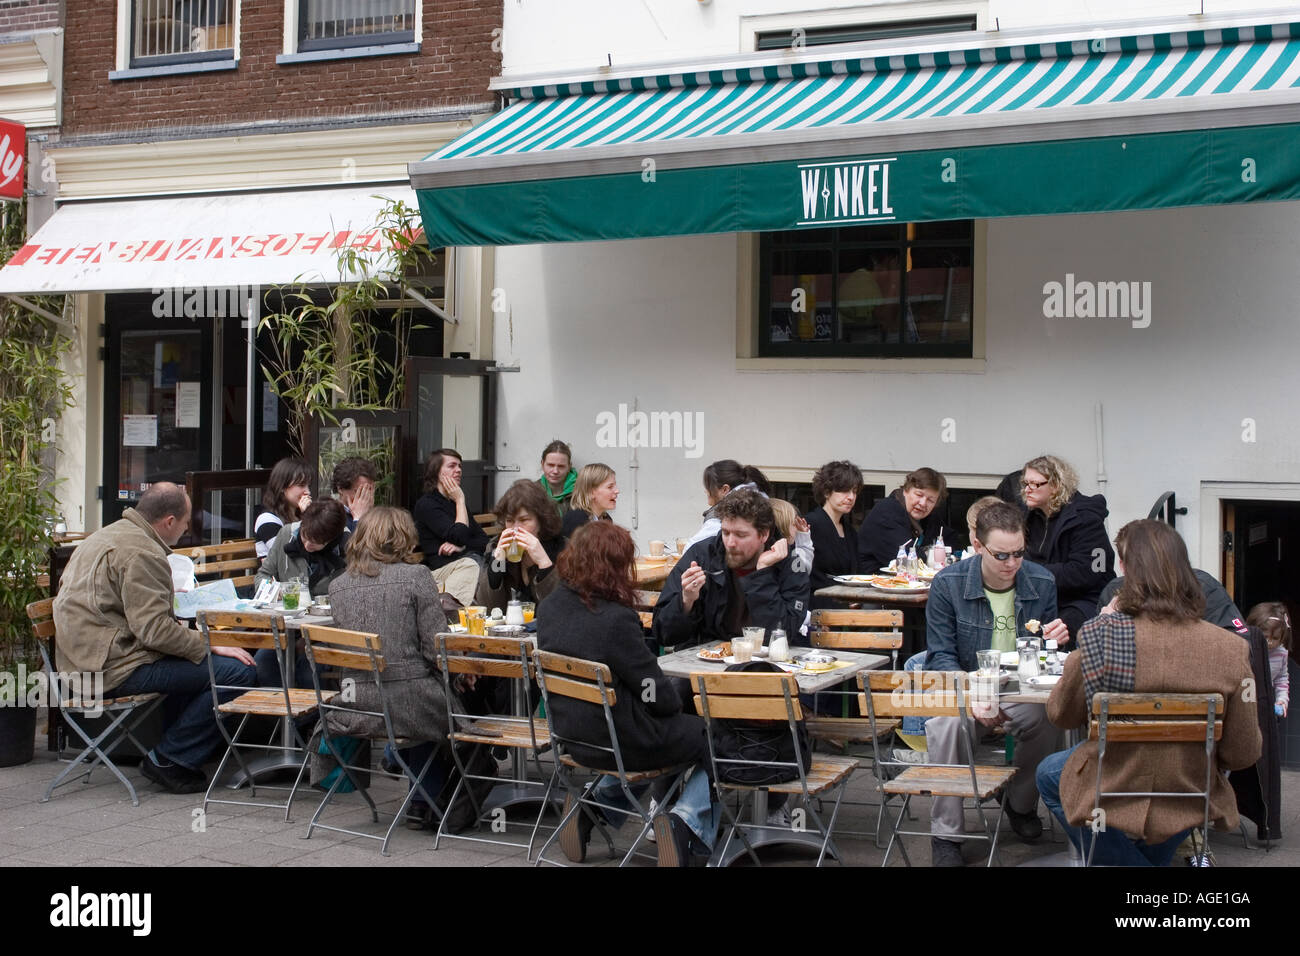 Cafe Winkel Jordaan Amsterdam The Netherlands Stock Photo - Alamy